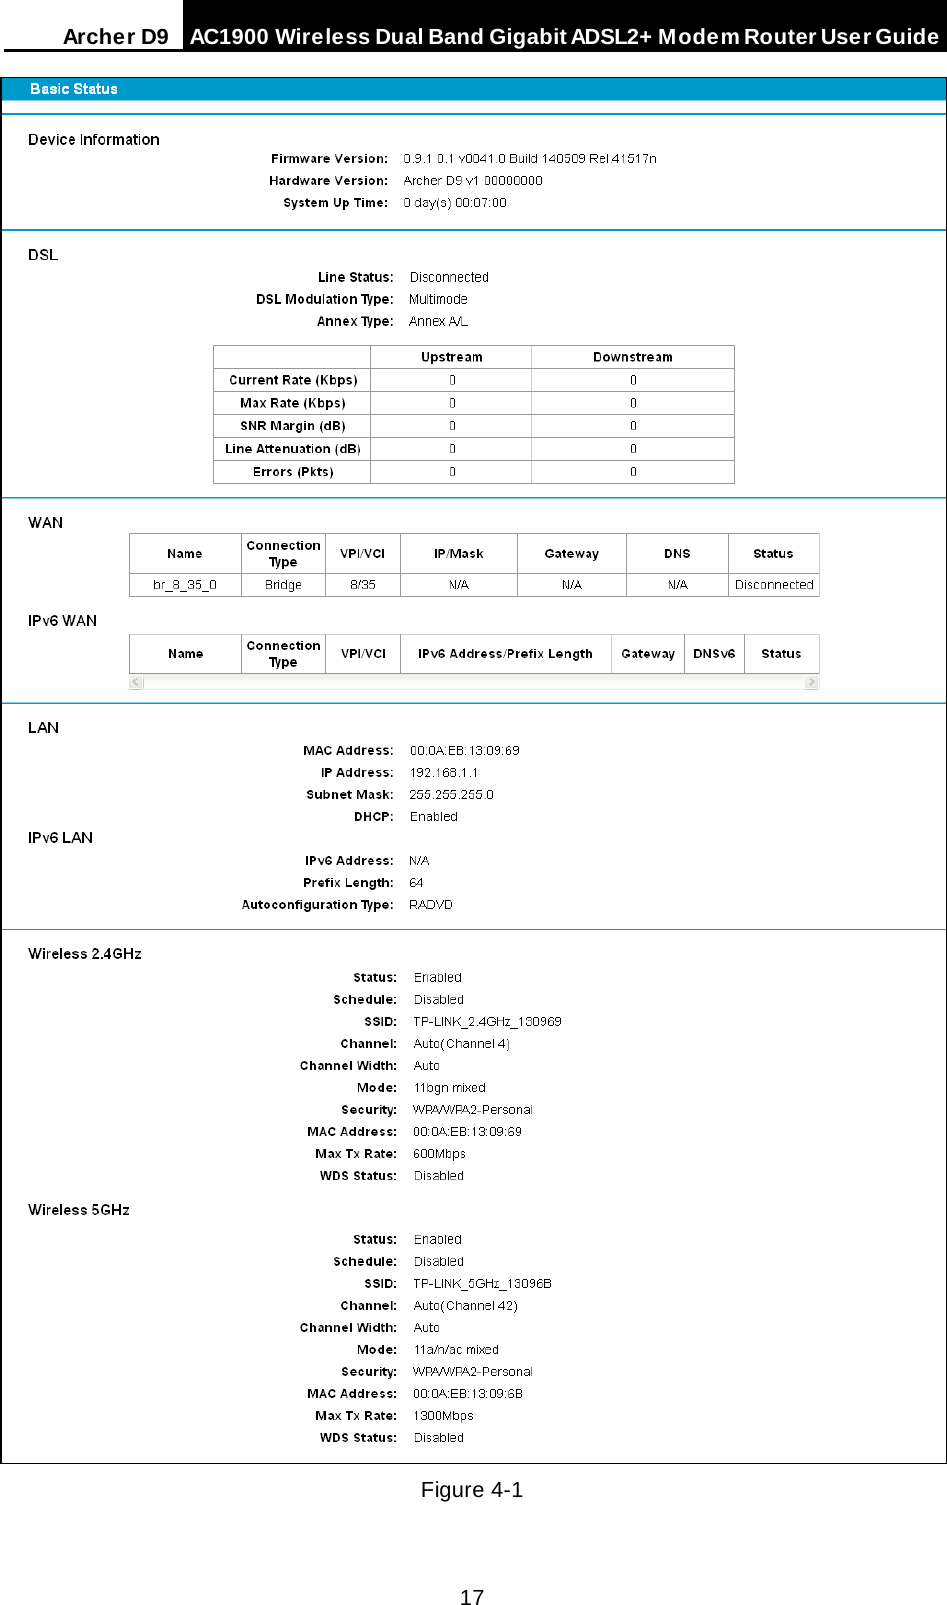 Arche r D9 AC1900 Wireless Dual Band Gigabit ADSL2+ Modem Router User Guide   Figure 4-1 17 